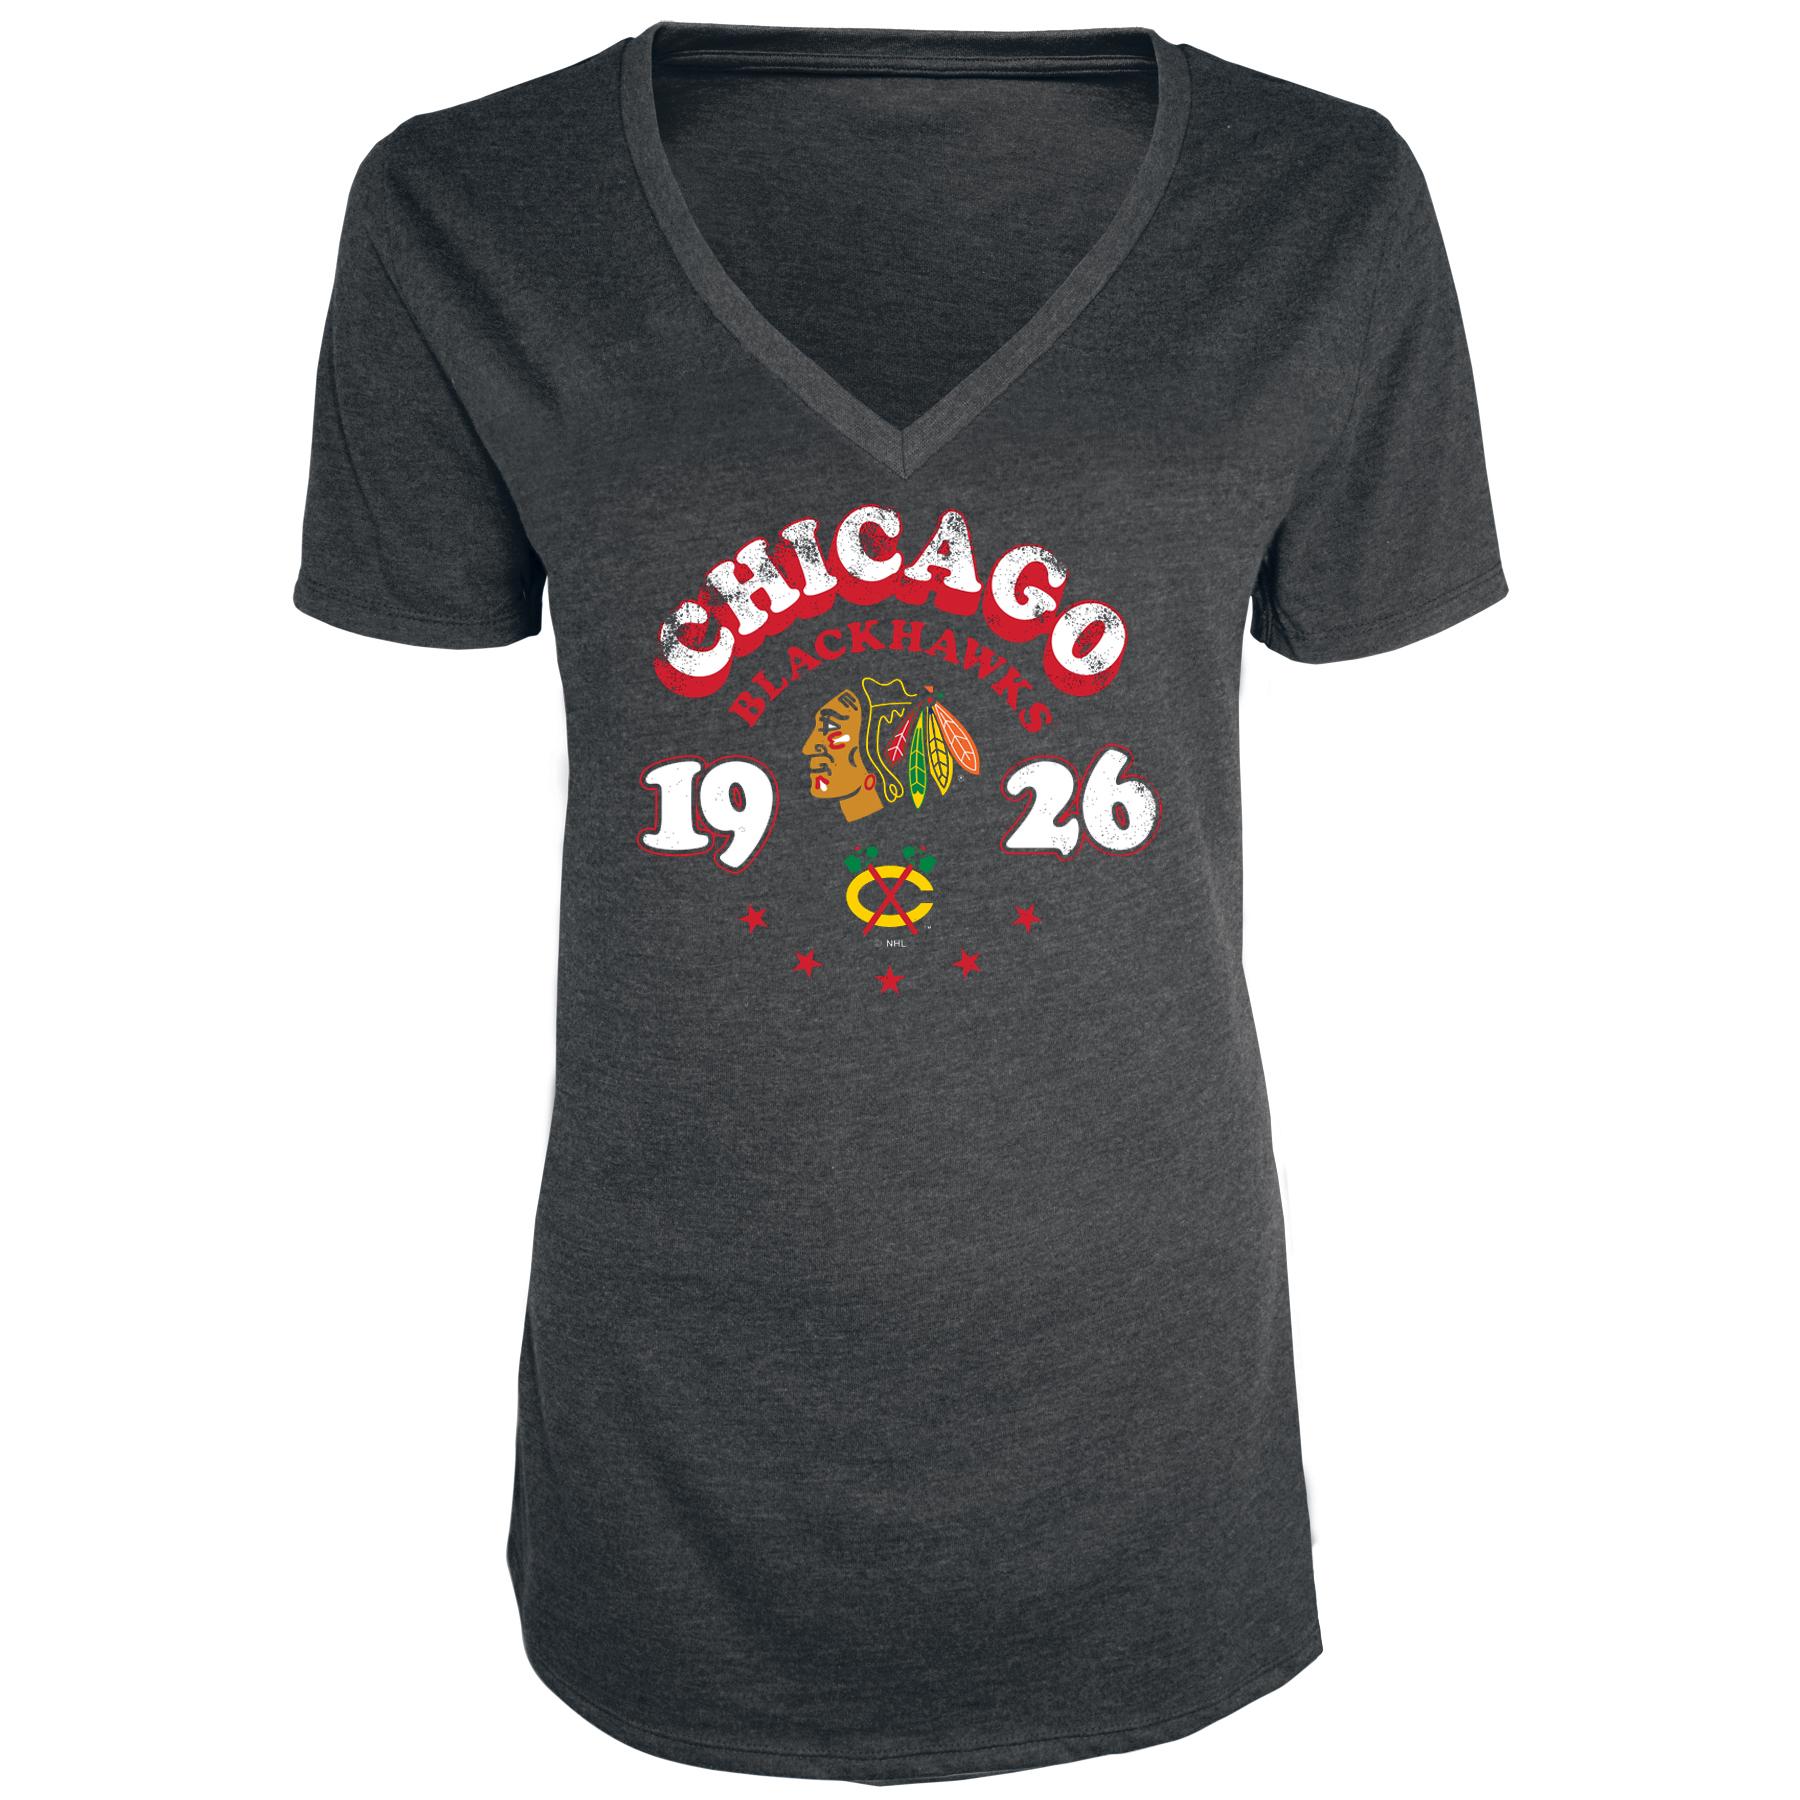 NHL Women's Graphic T-Shirt - Chicago Blackhawks